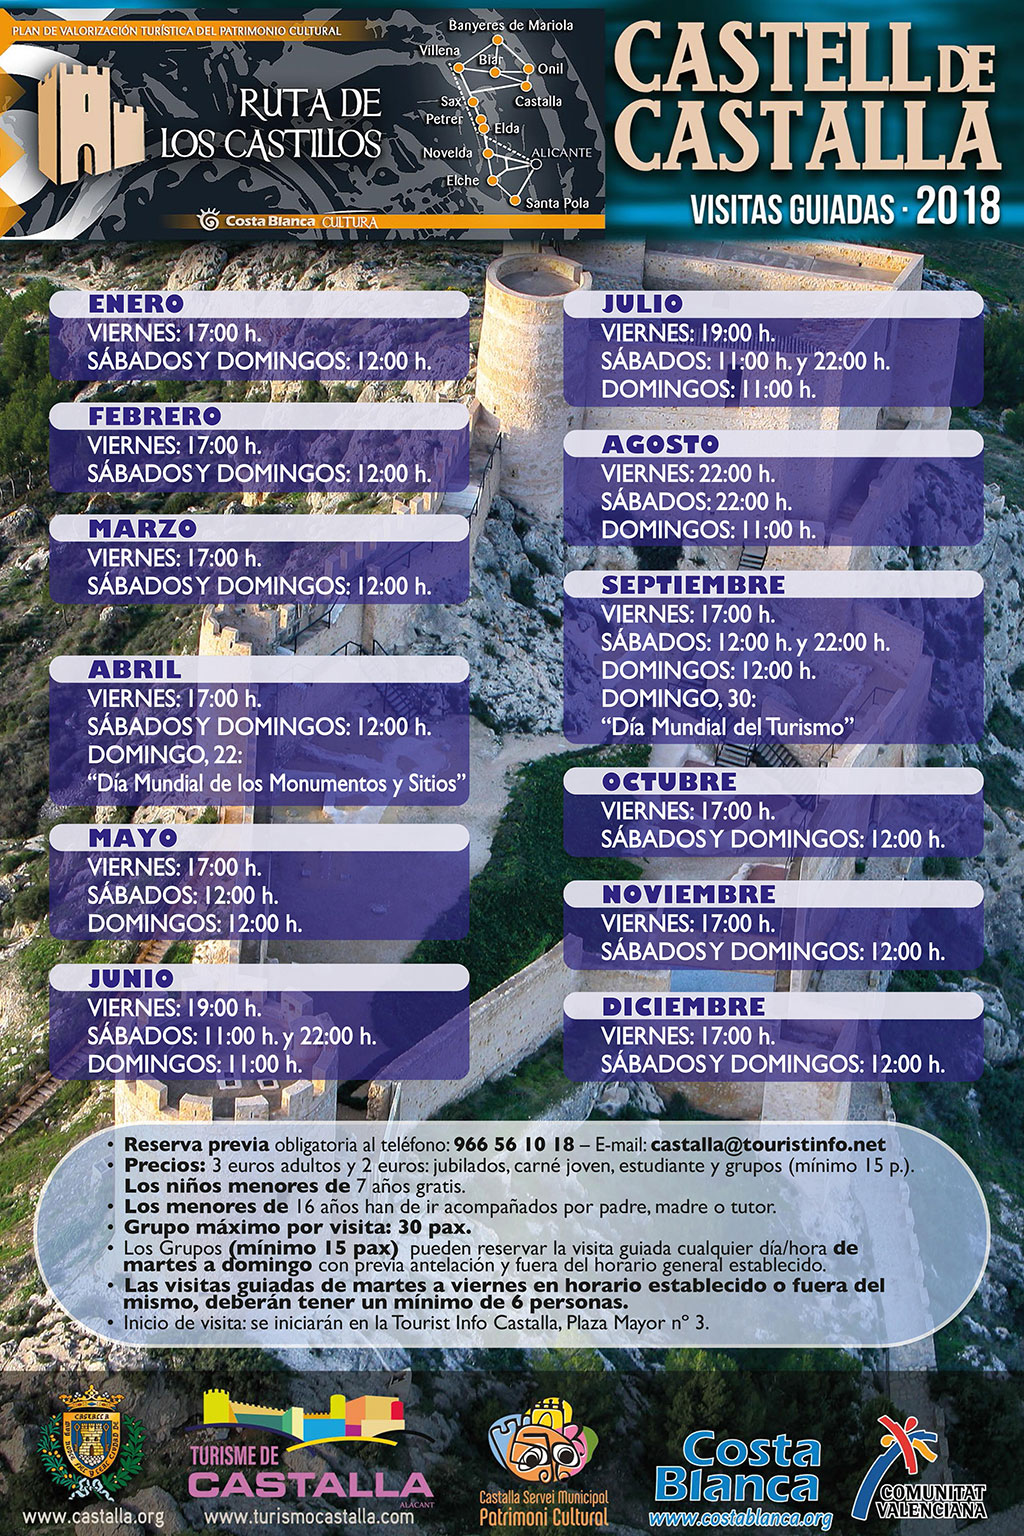 Castillo de Castalla: timetable